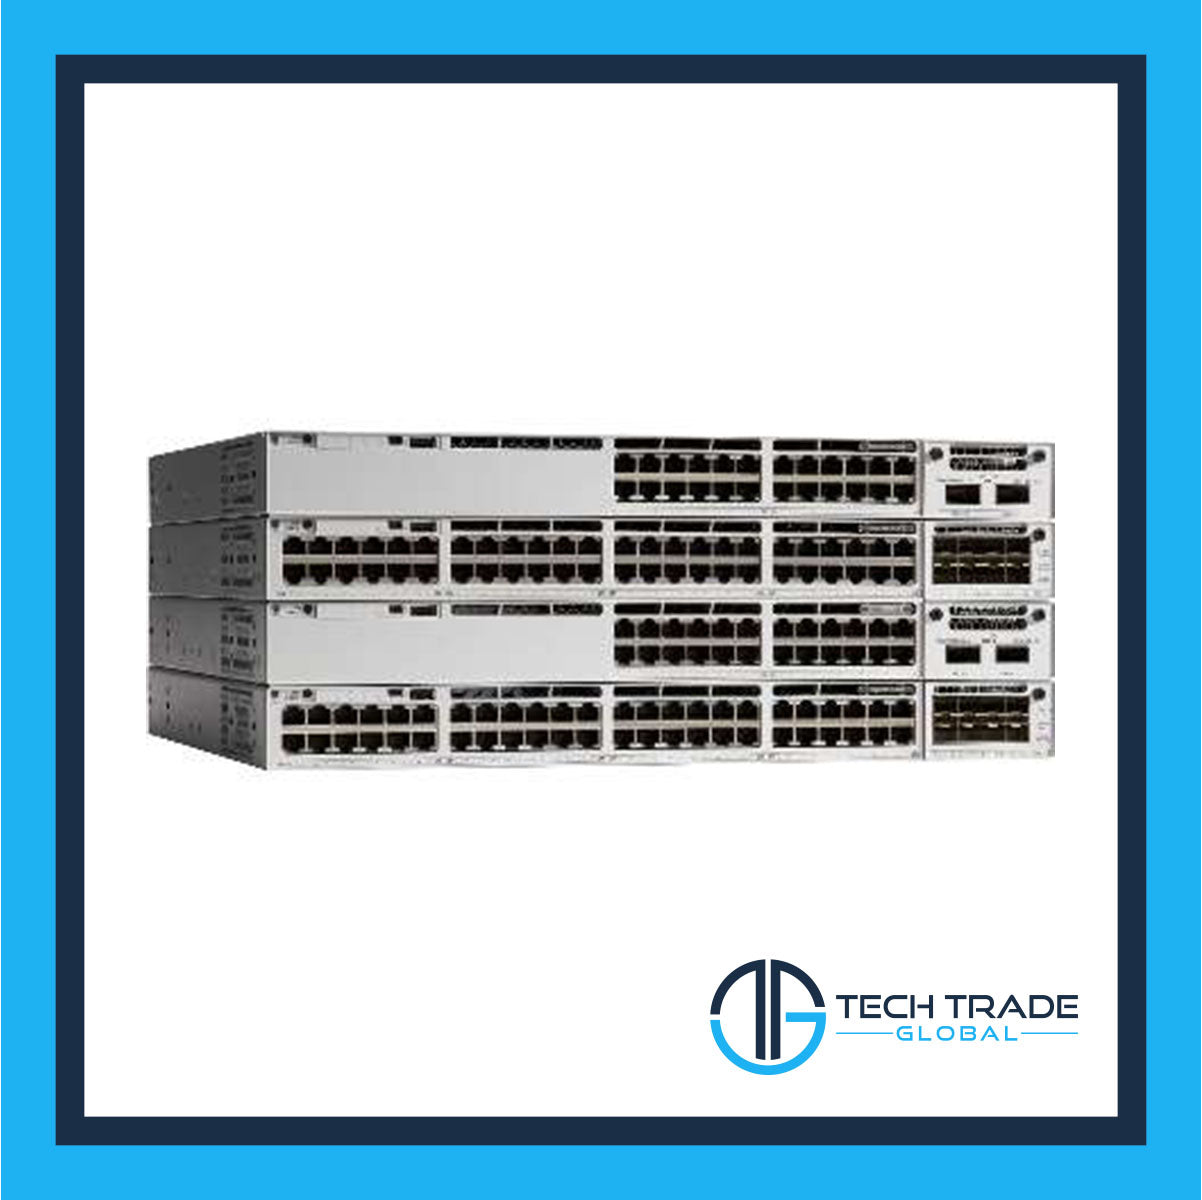 C9300-24P-A | Cisco Catalyst 9300 - Network Advantage - switch - 24 ports - managed - rack mountable